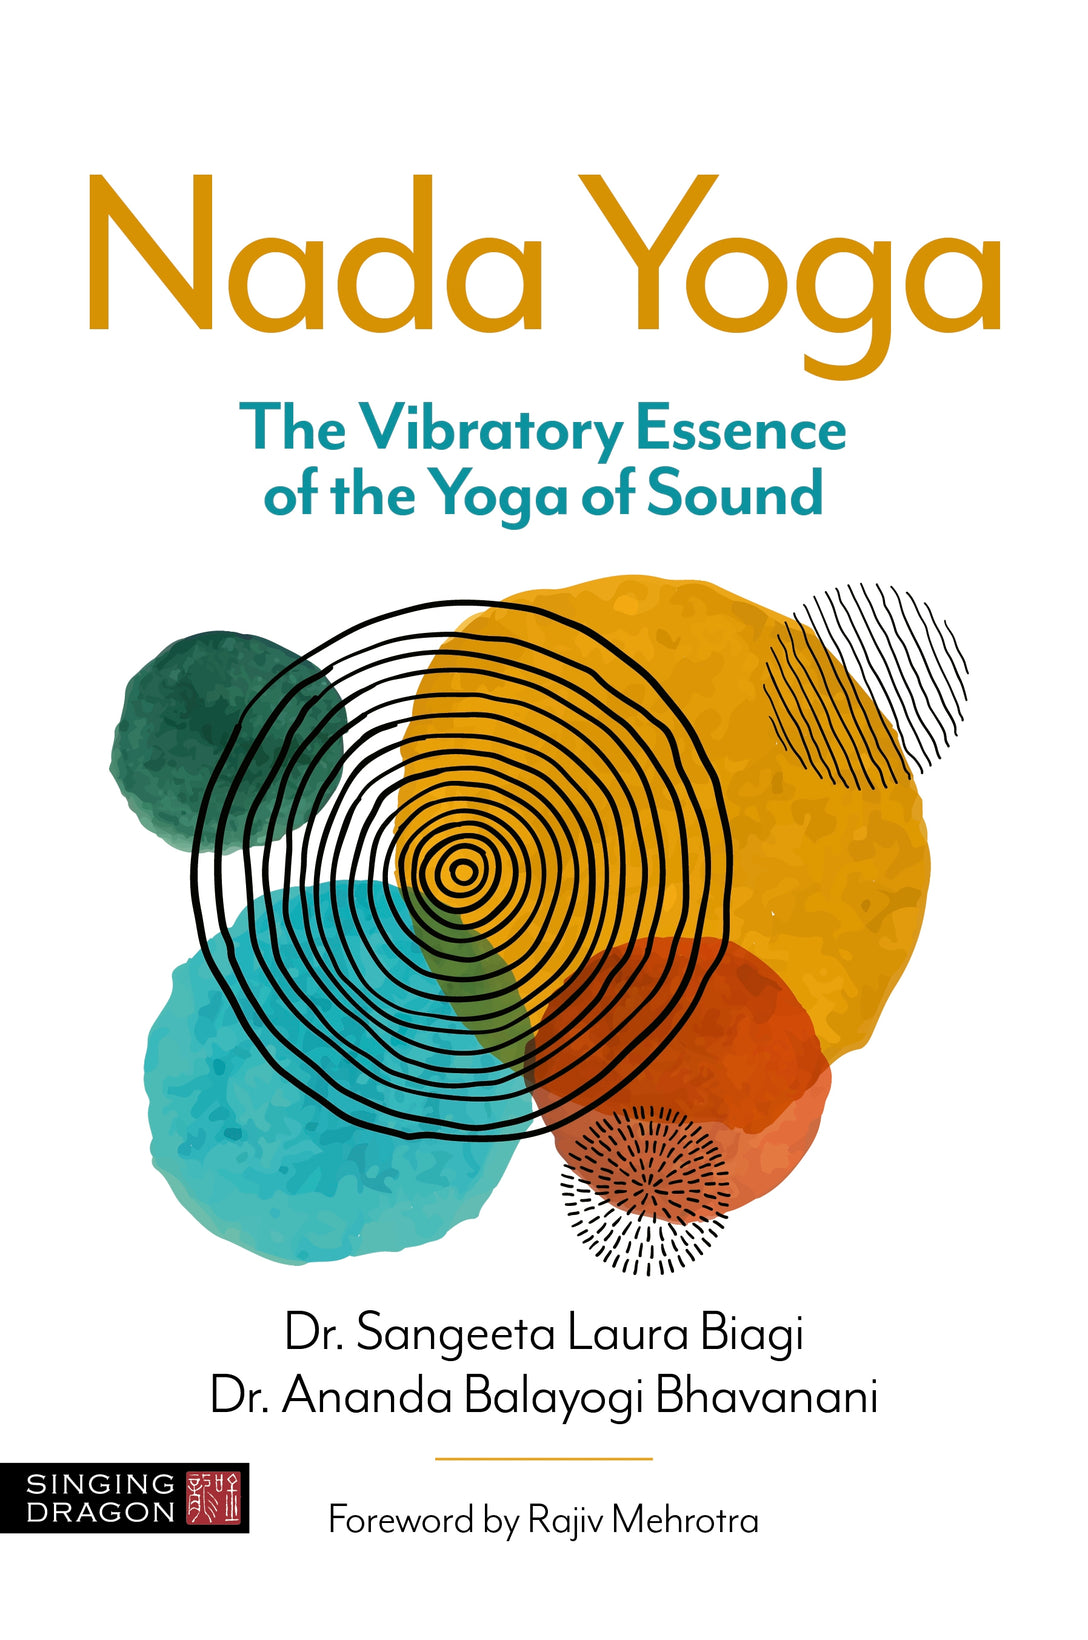 Nada Yoga by Dr Sangeeta Laura Biagi, Ananda Balayogi Bhavanani, Rajiv Mehrotra